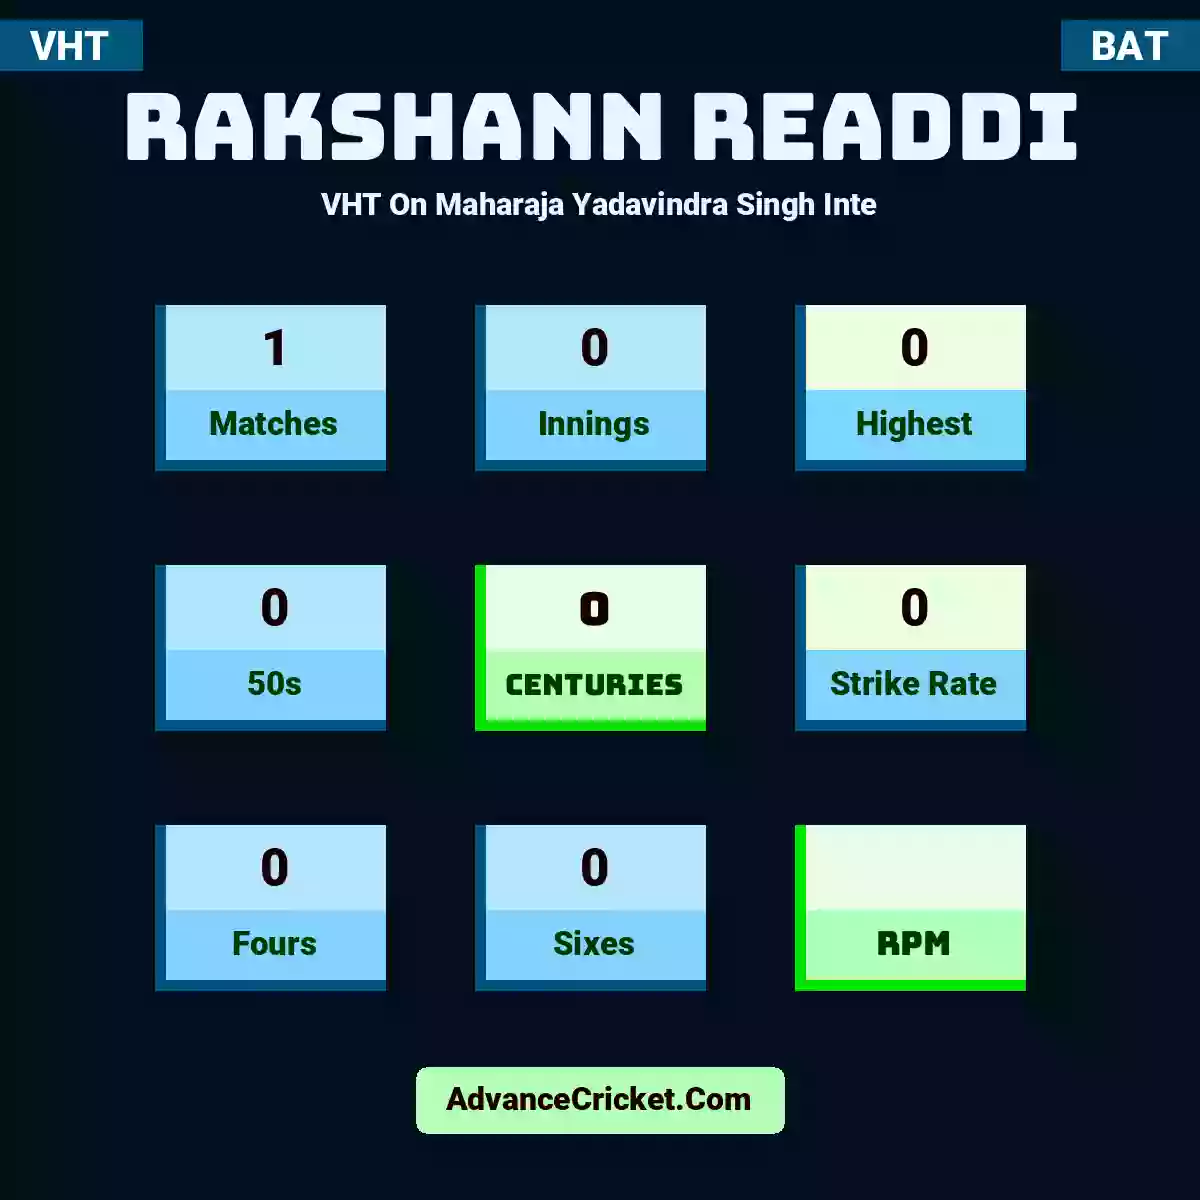 Rakshann Readdi VHT  On Maharaja Yadavindra Singh Inte, Rakshann Readdi played 1 matches, scored 0 runs as highest, 0 half-centuries, and 0 centuries, with a strike rate of 0. R.Readdi hit 0 fours and 0 sixes.